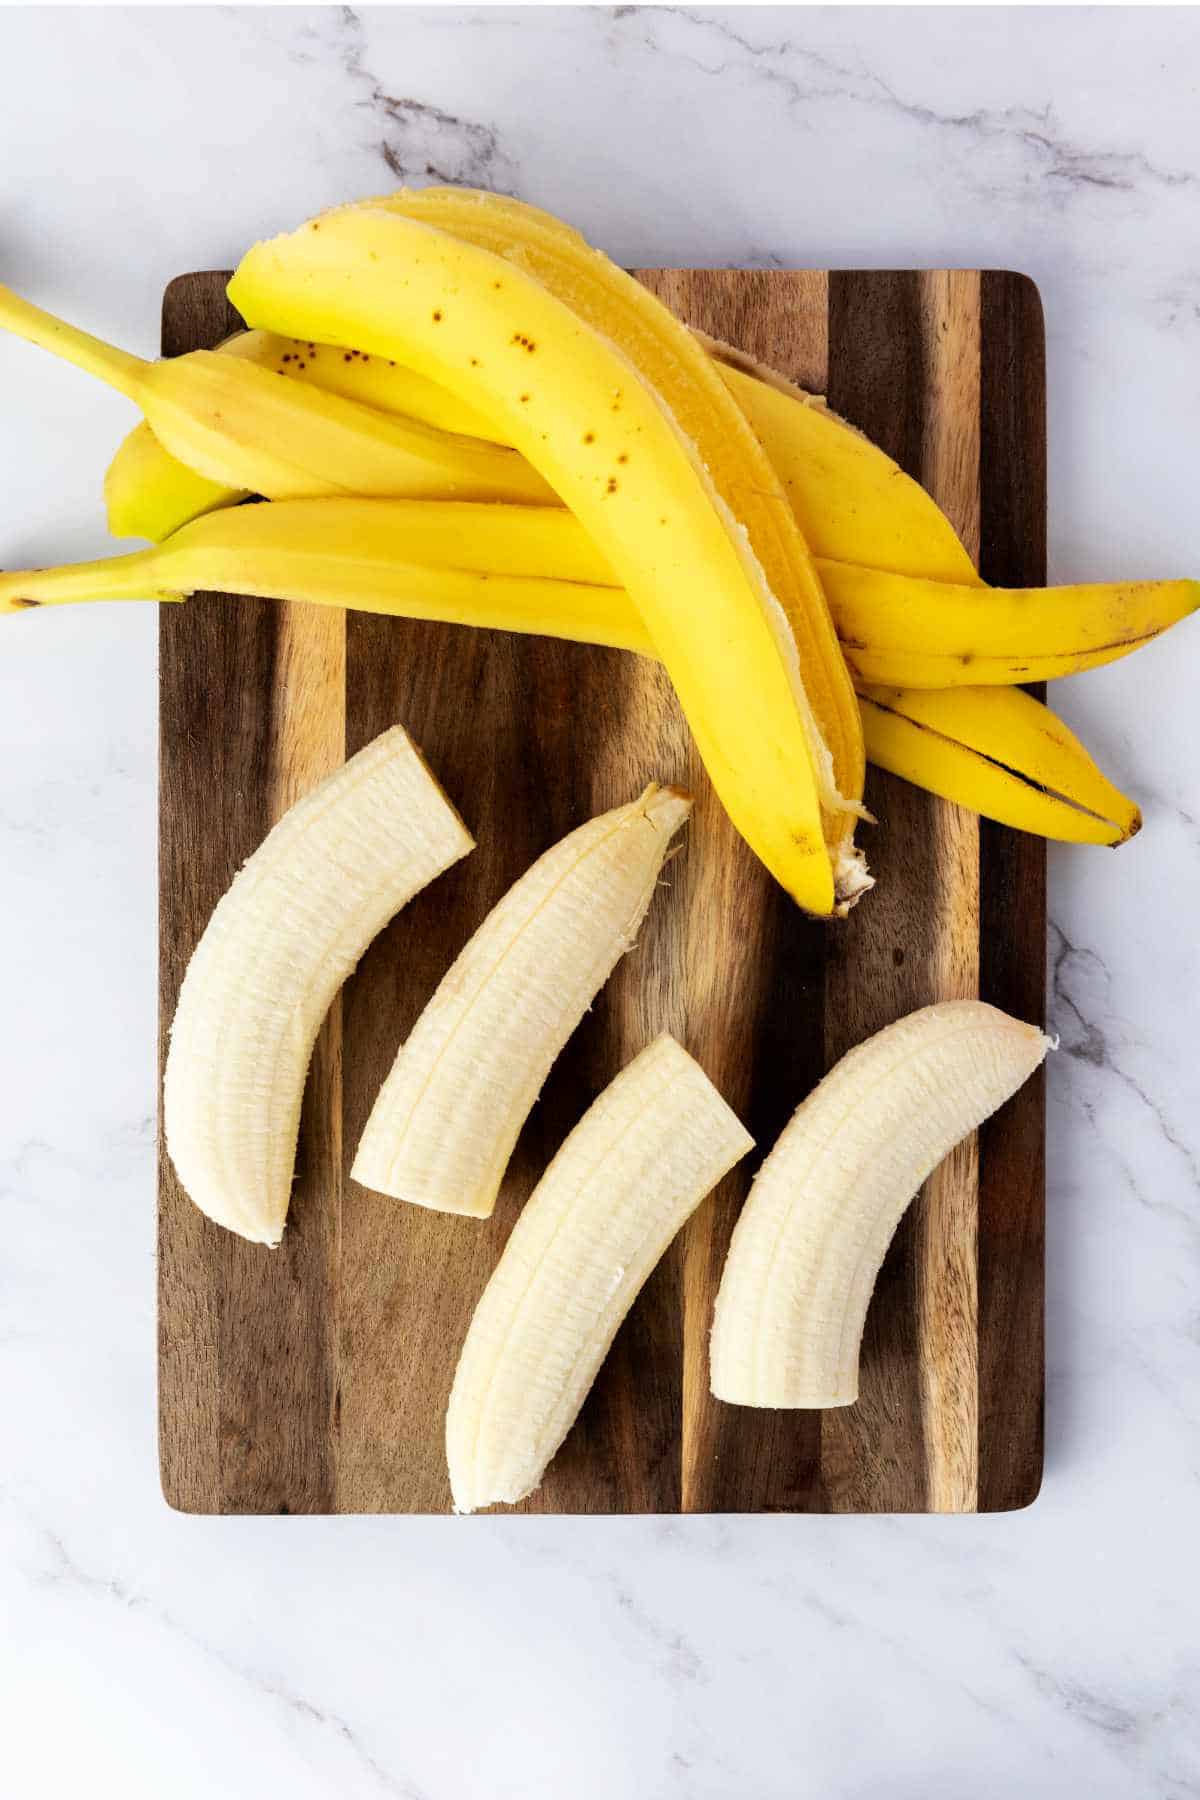 peeled bananas cut in half.